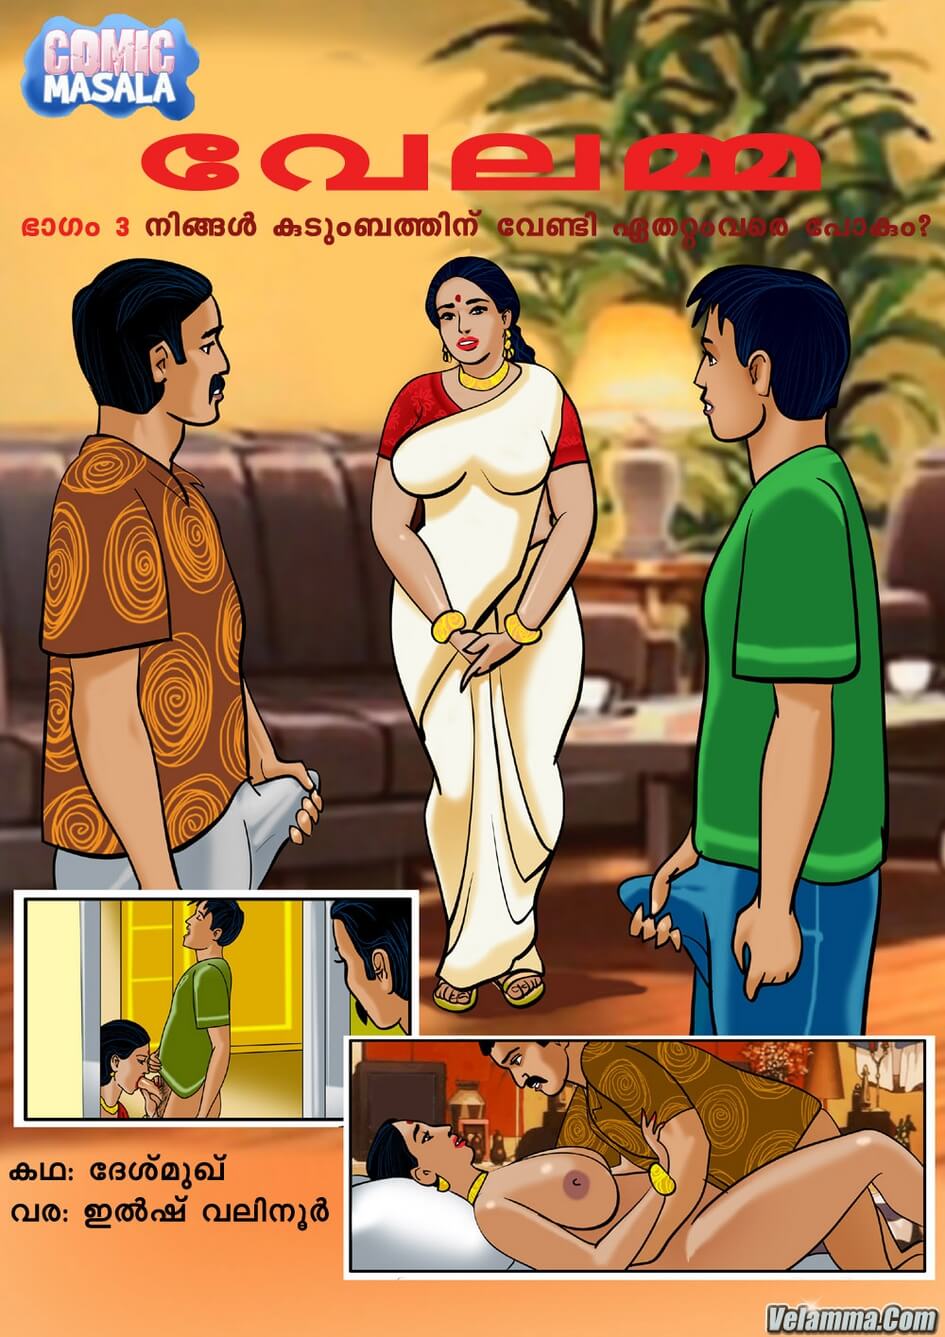 Velamma malayalam cartoon